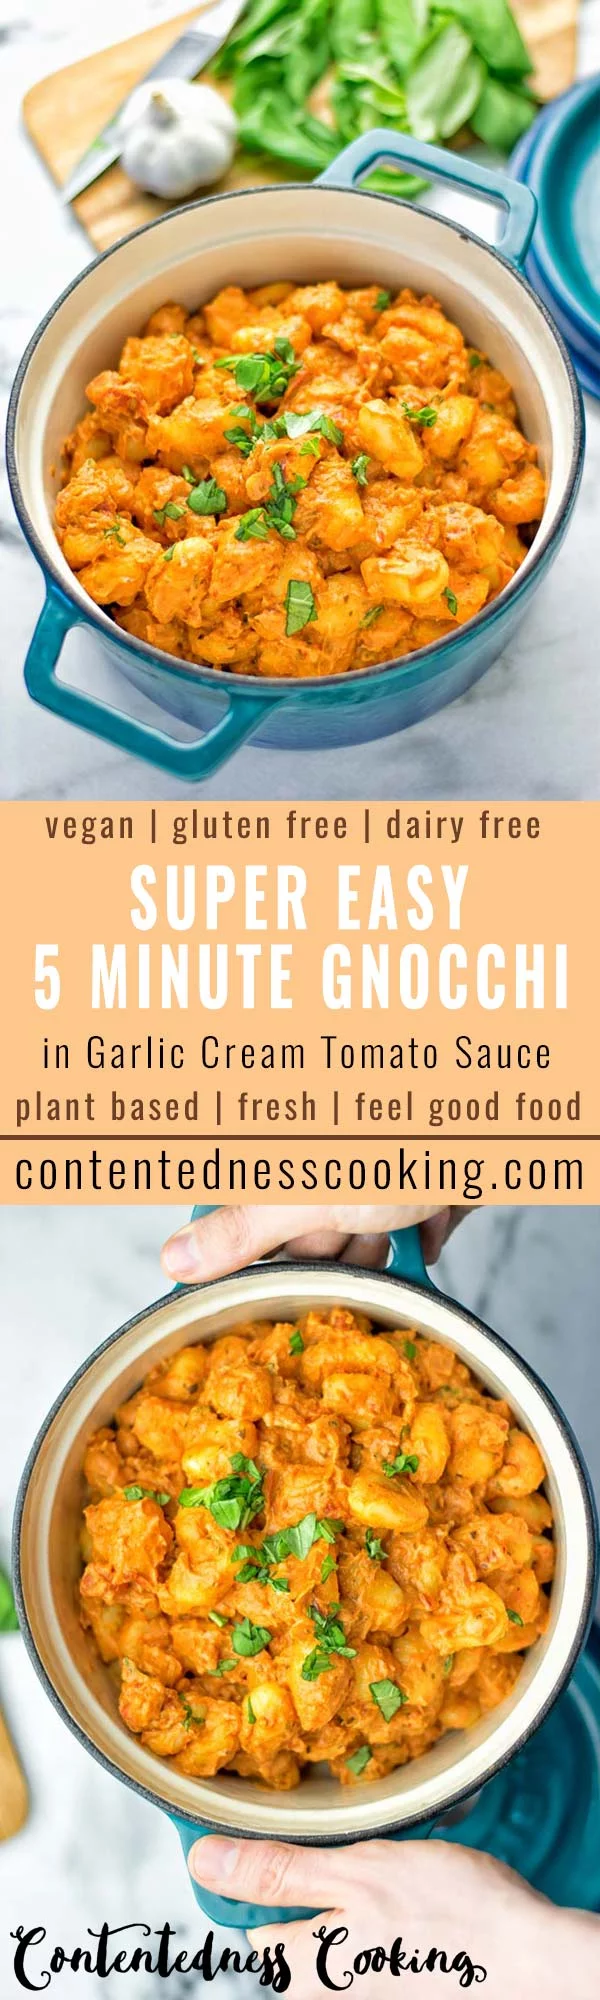 Gnocchi with Garlic Cream Tomato Sauce | #vegan #glutenfree #contentednesscooking #creamy #tahini